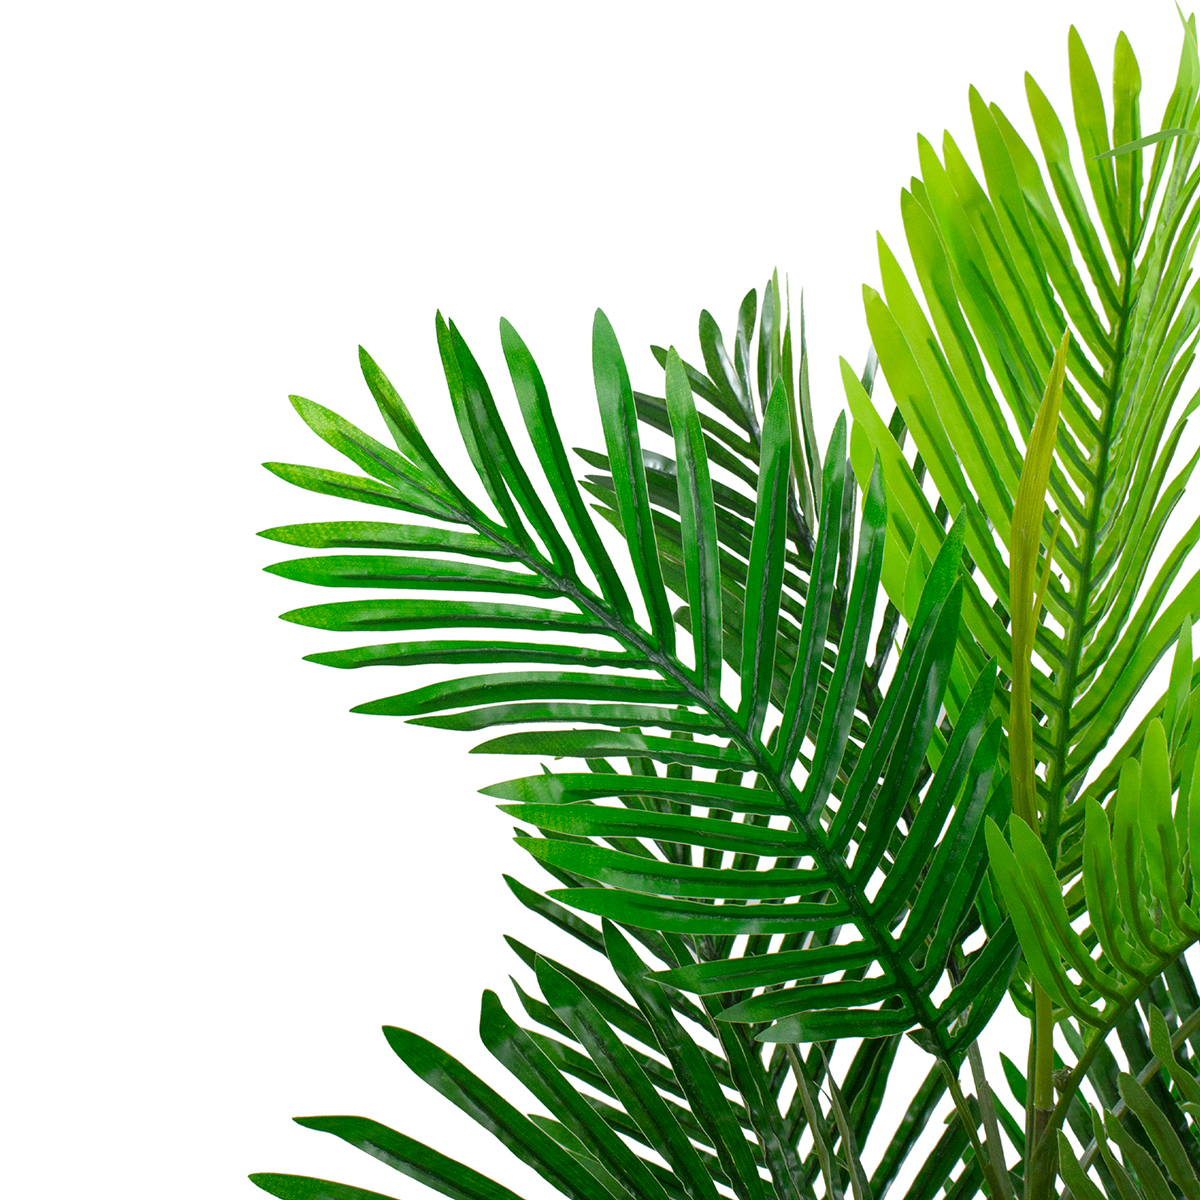 Northlight Seasonal 40 Artificial Tropical Mini Palm Potted Tree